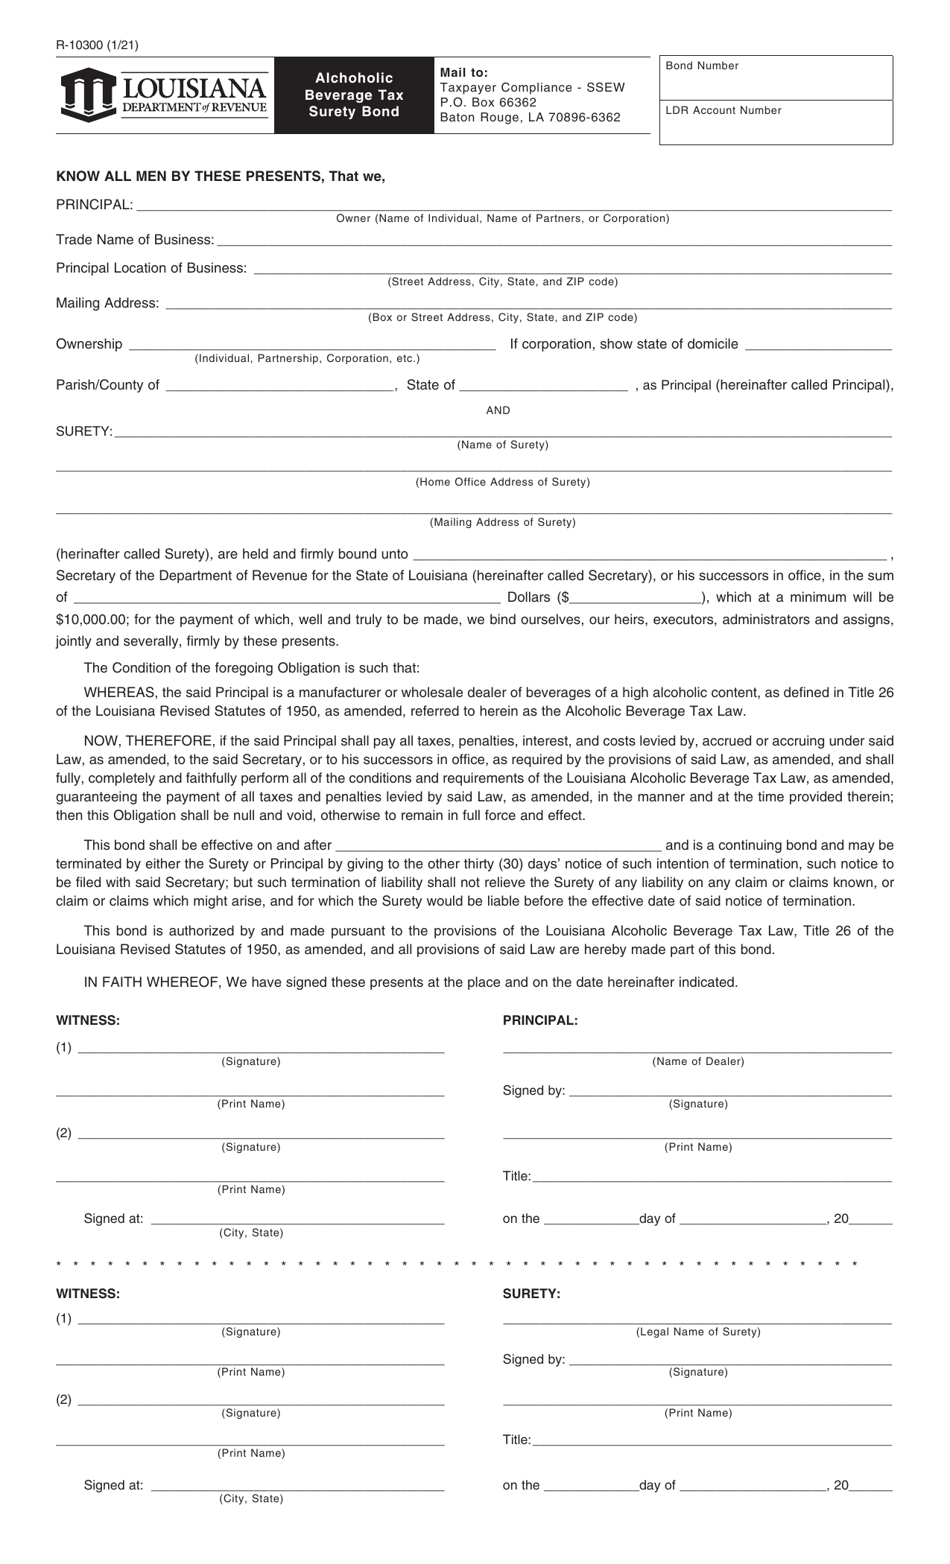 Form R-10300 Alchoholic Beverage Tax Surety Bond - Louisiana, Page 1